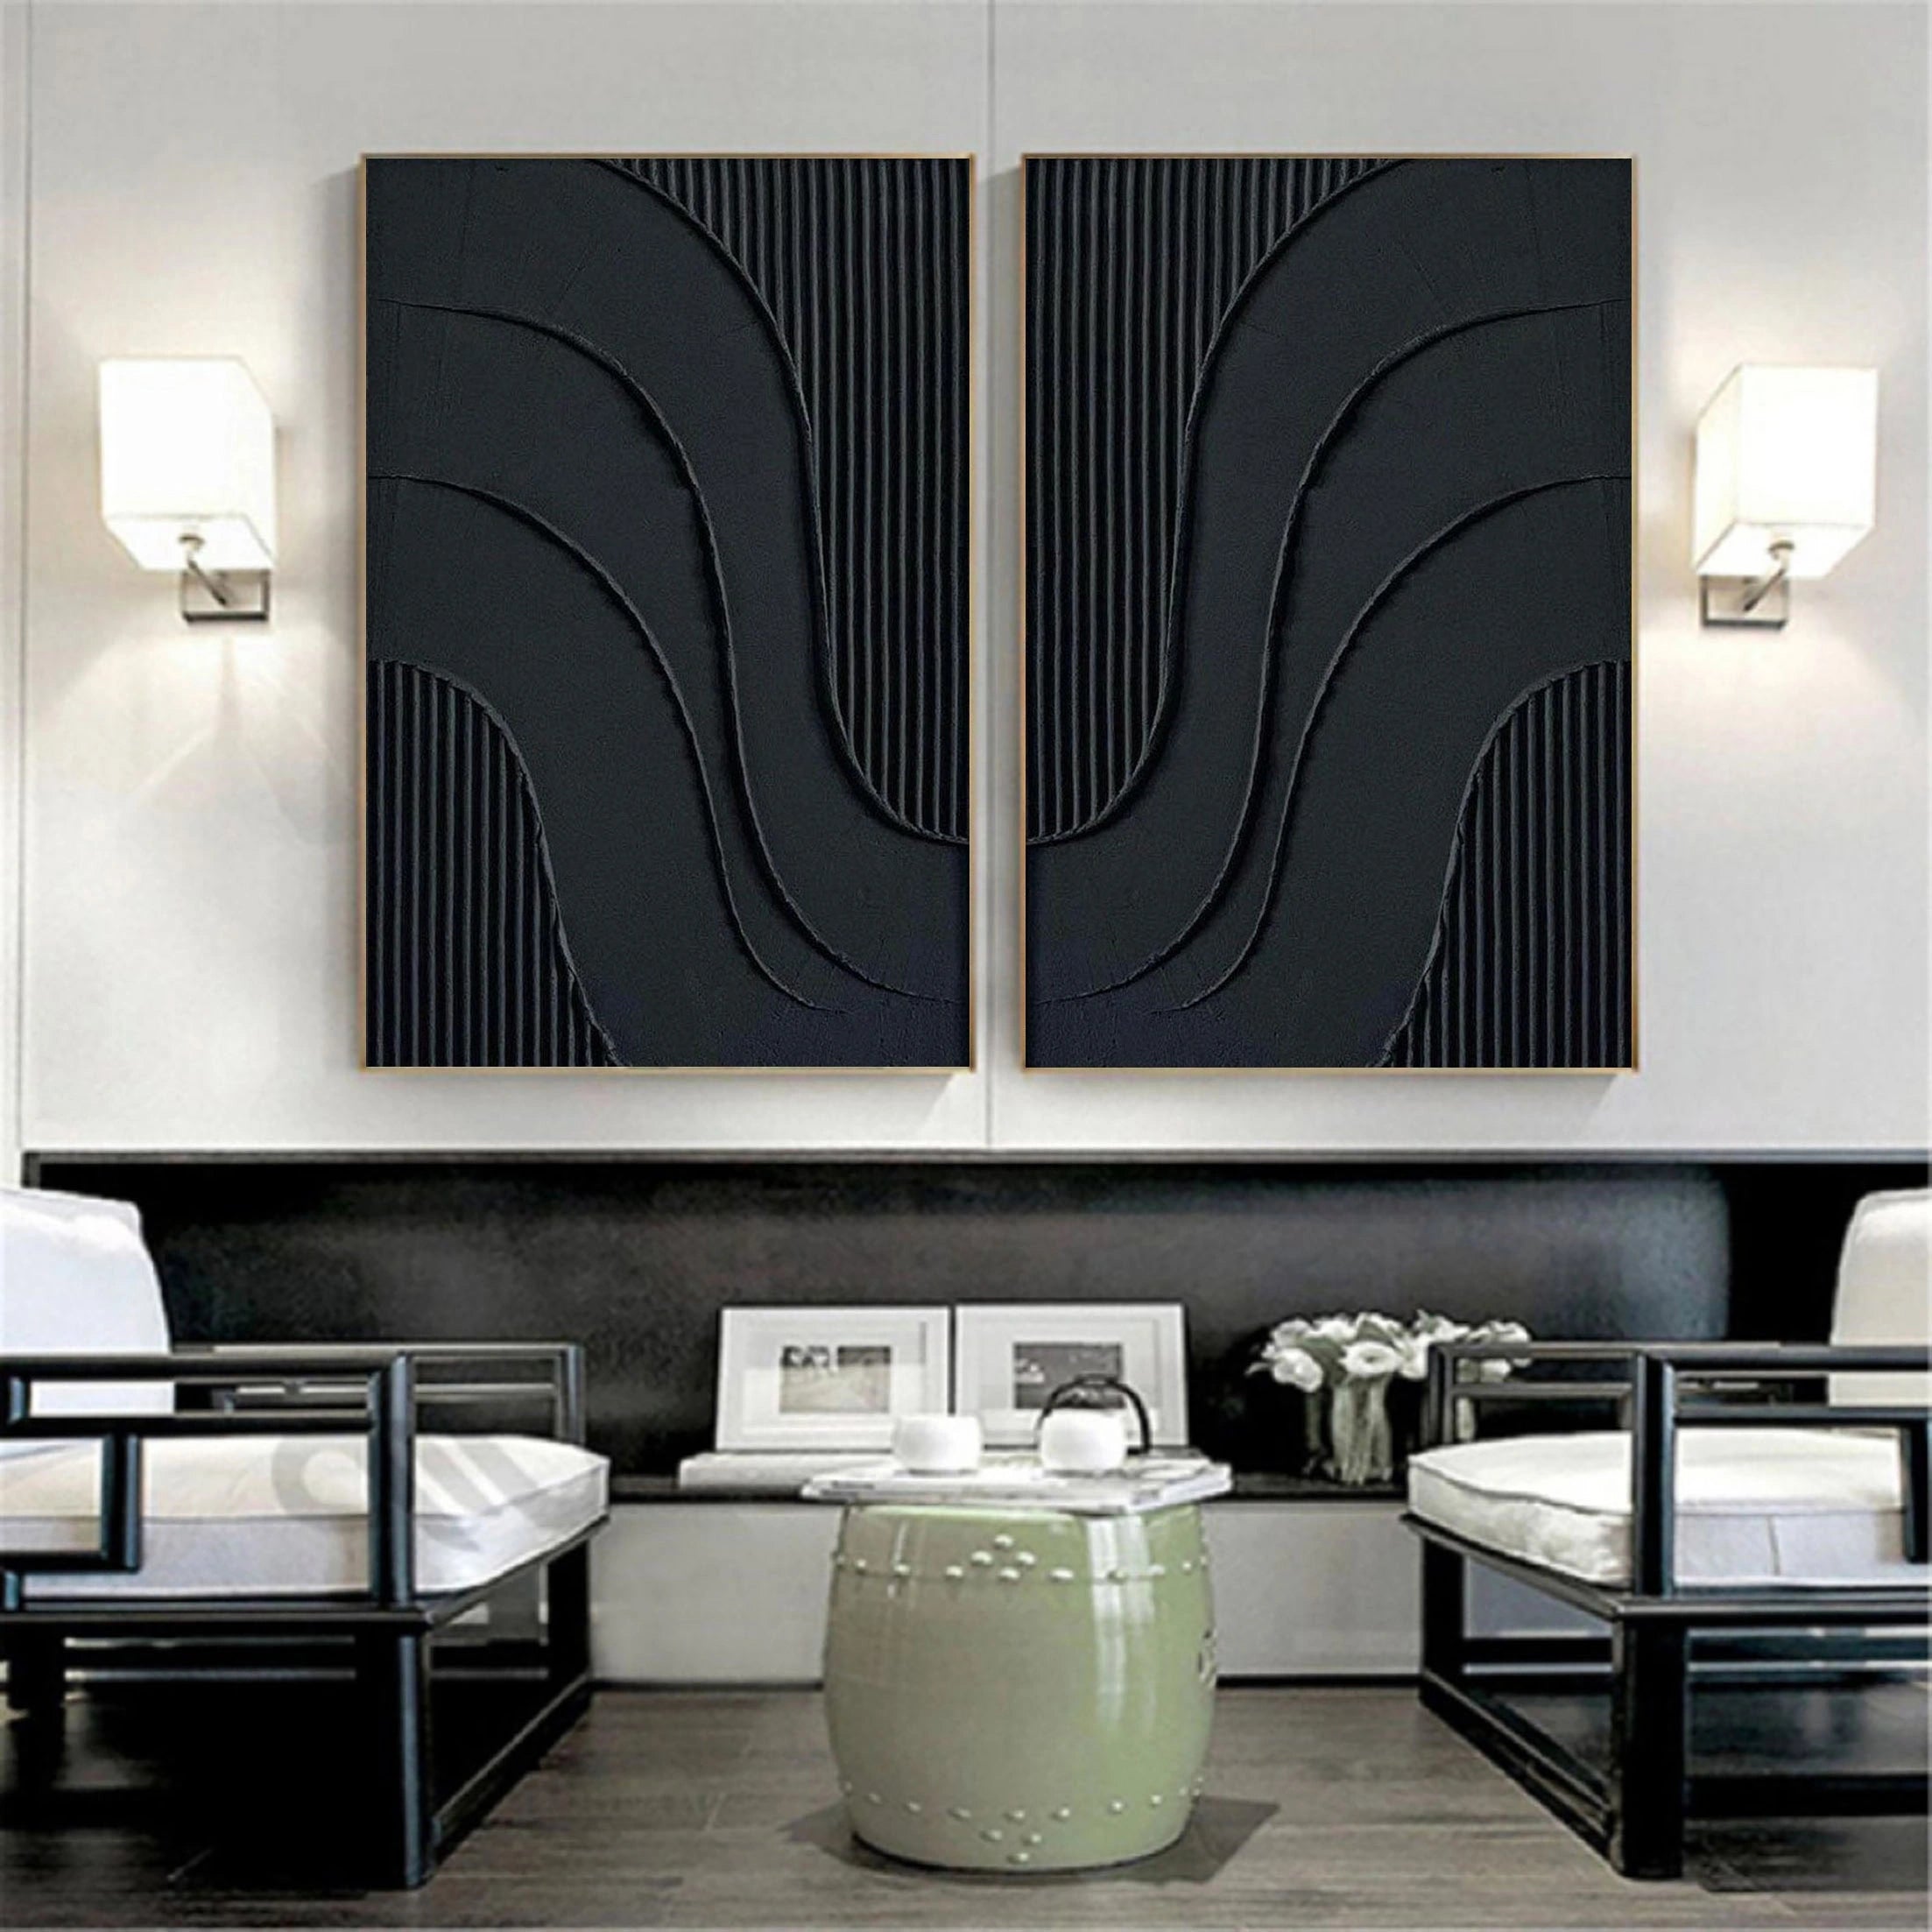 Set of 2 Black Minimalist Textured Original Painting, Large Modern Abstract Wall Decor